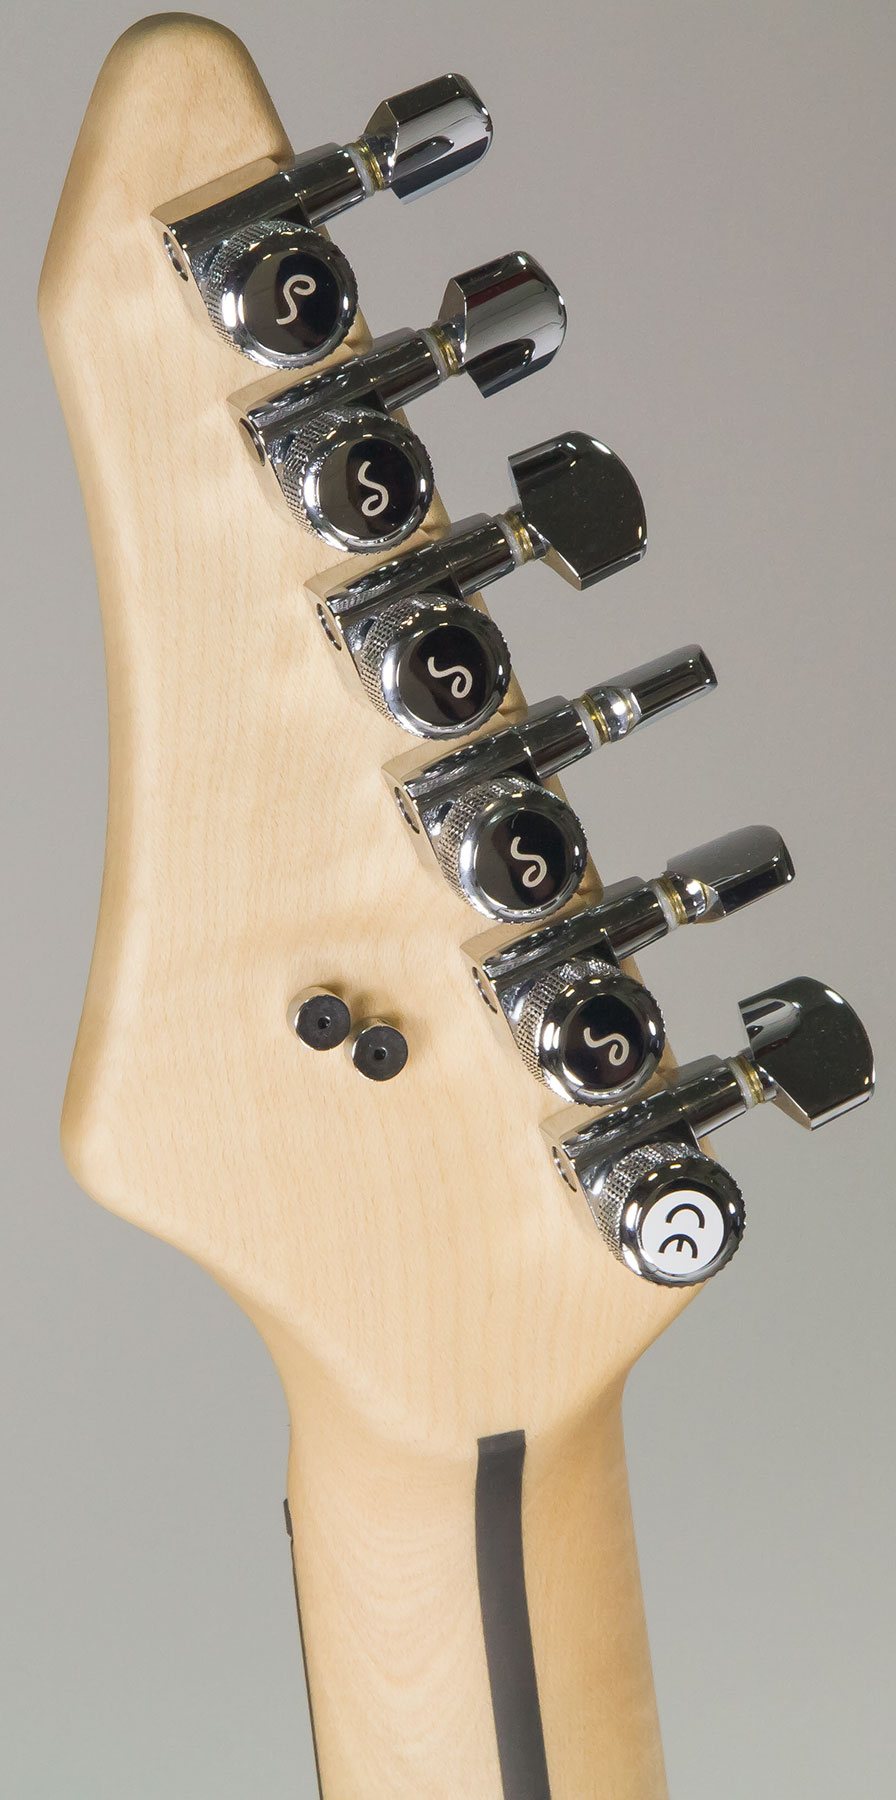 Vigier Excalibur Indus 2h Trem Rw - Textured Black - Str shape electric guitar - Variation 5